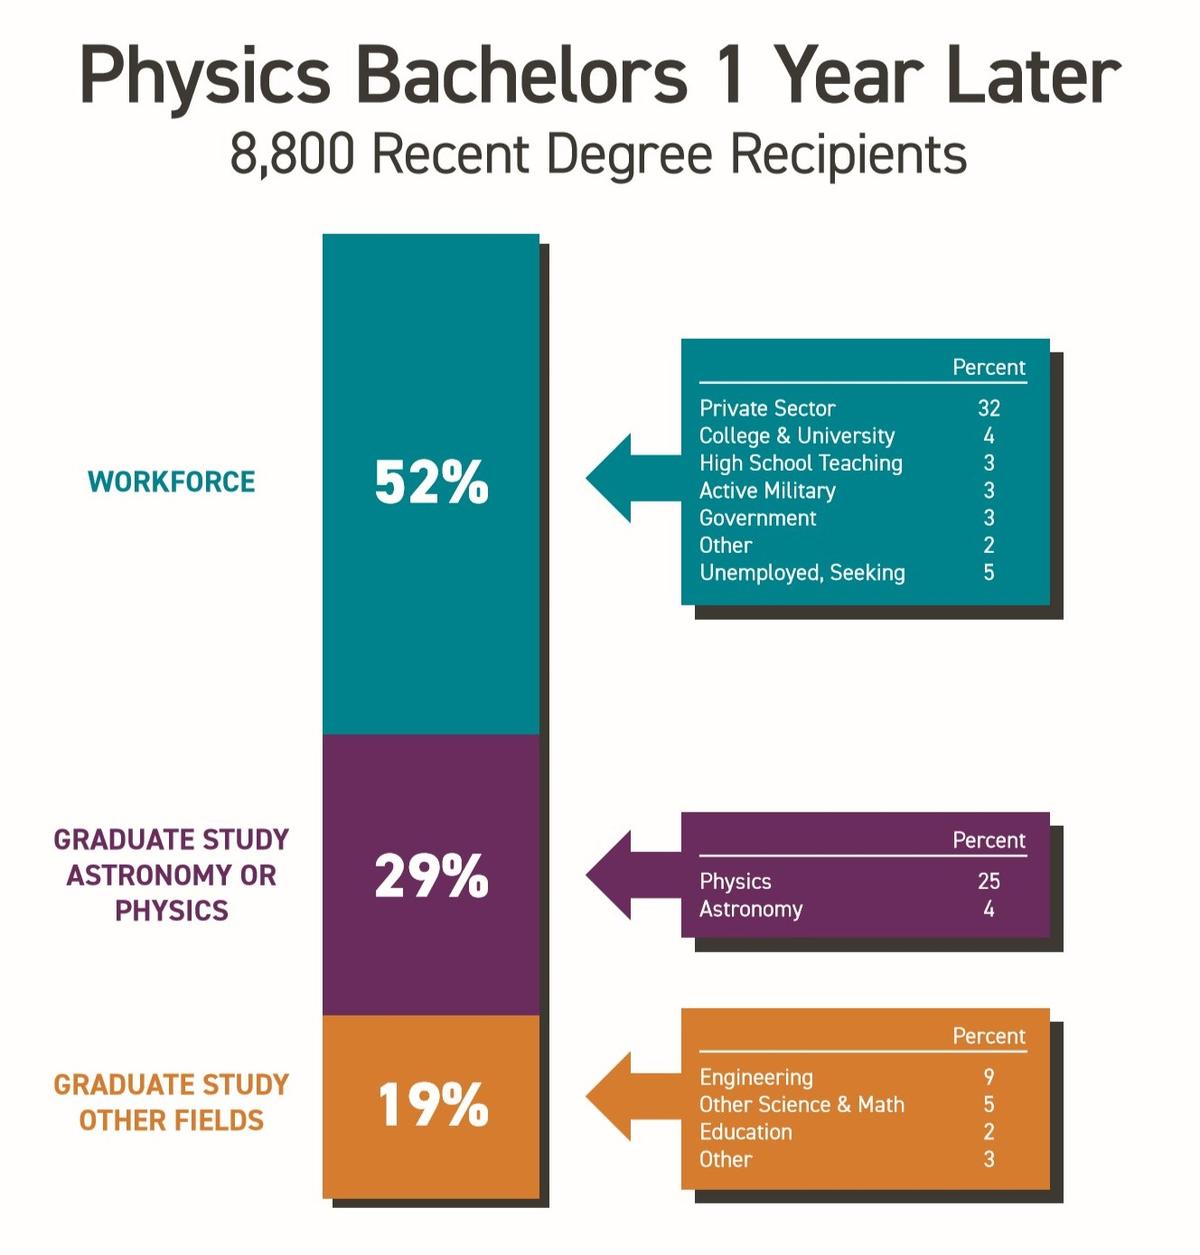 Physics bachelors one year later